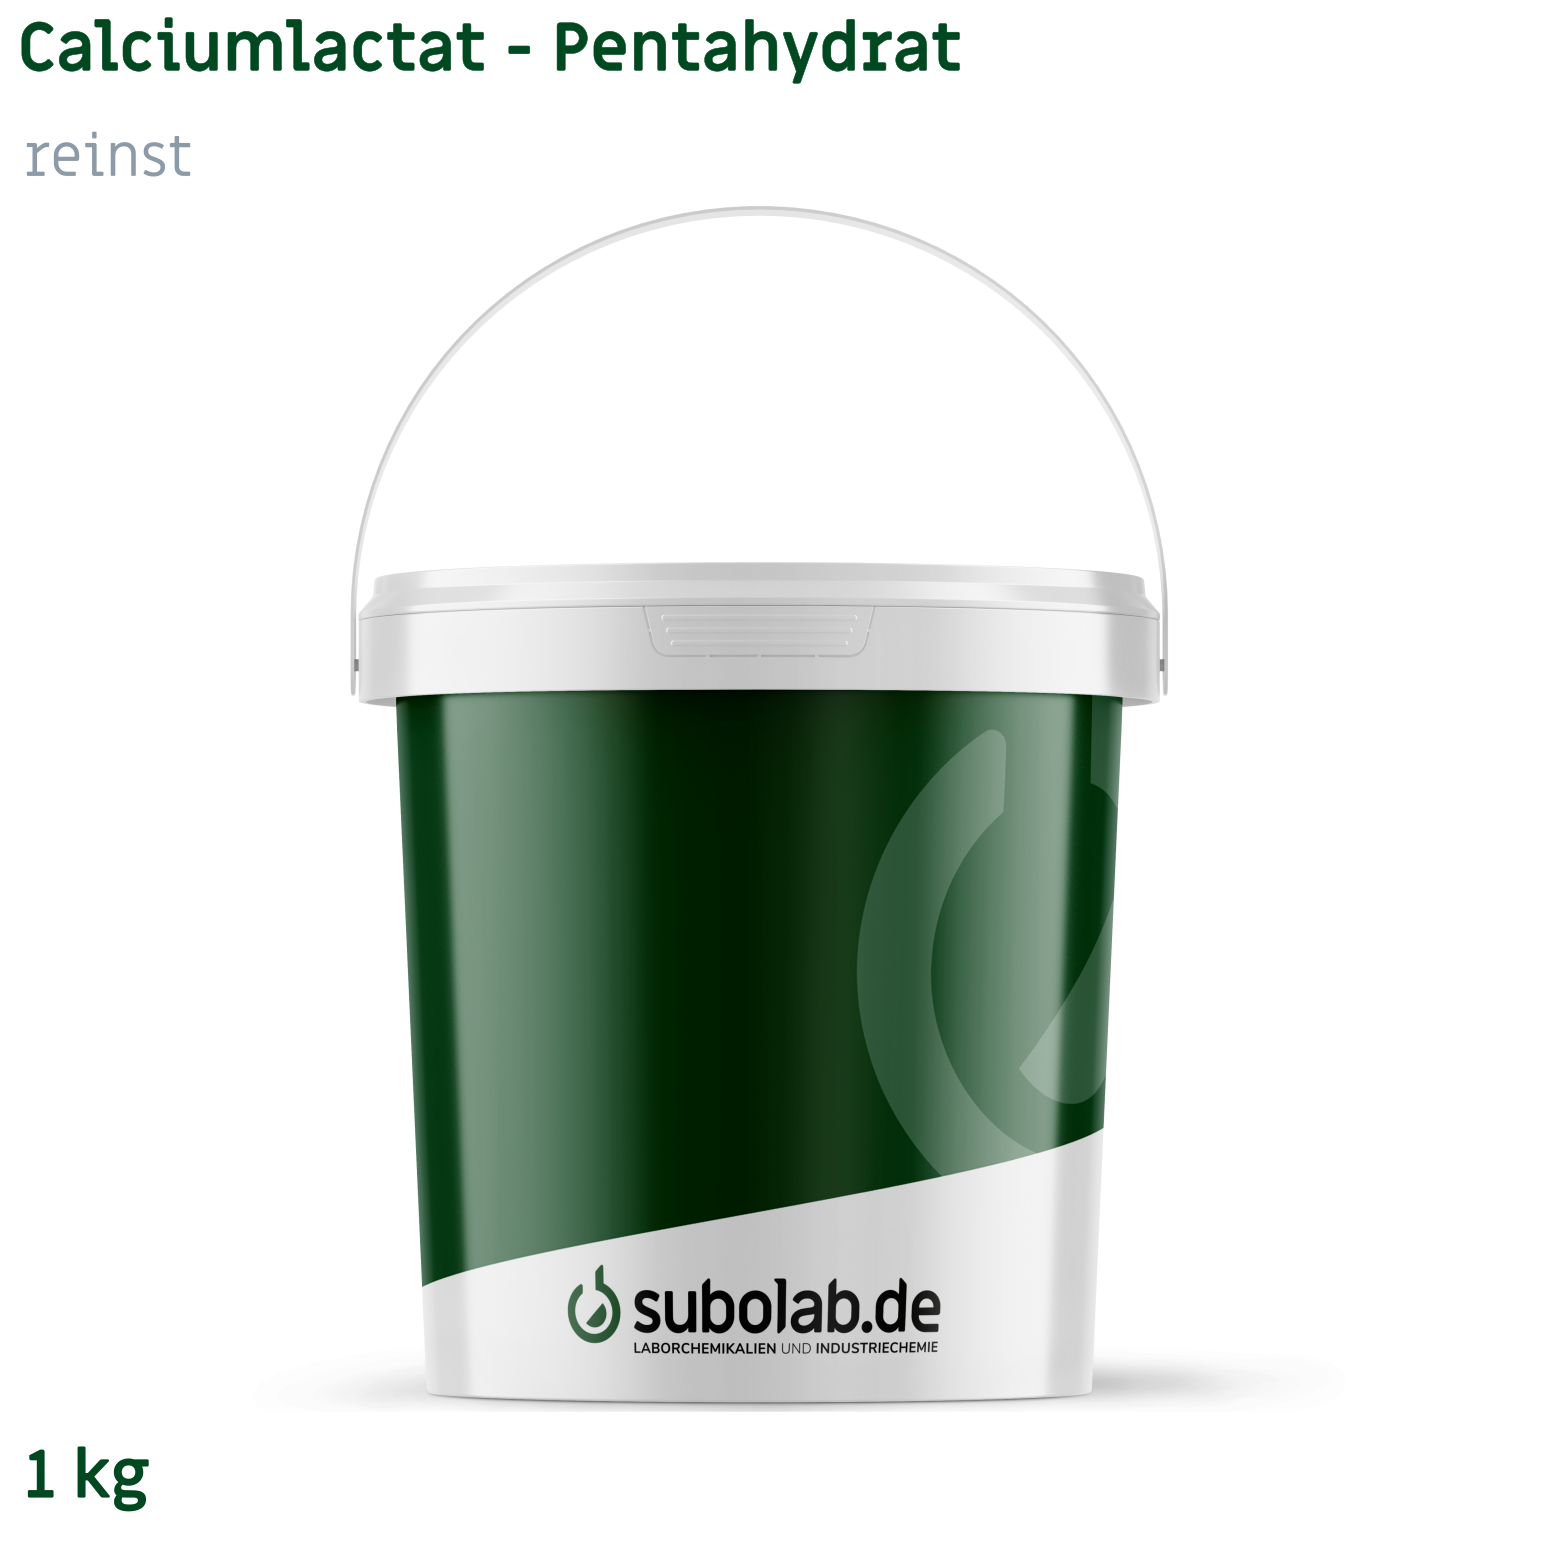 Bild von Calciumlactat - Pentahydrat reinst (1 kg)